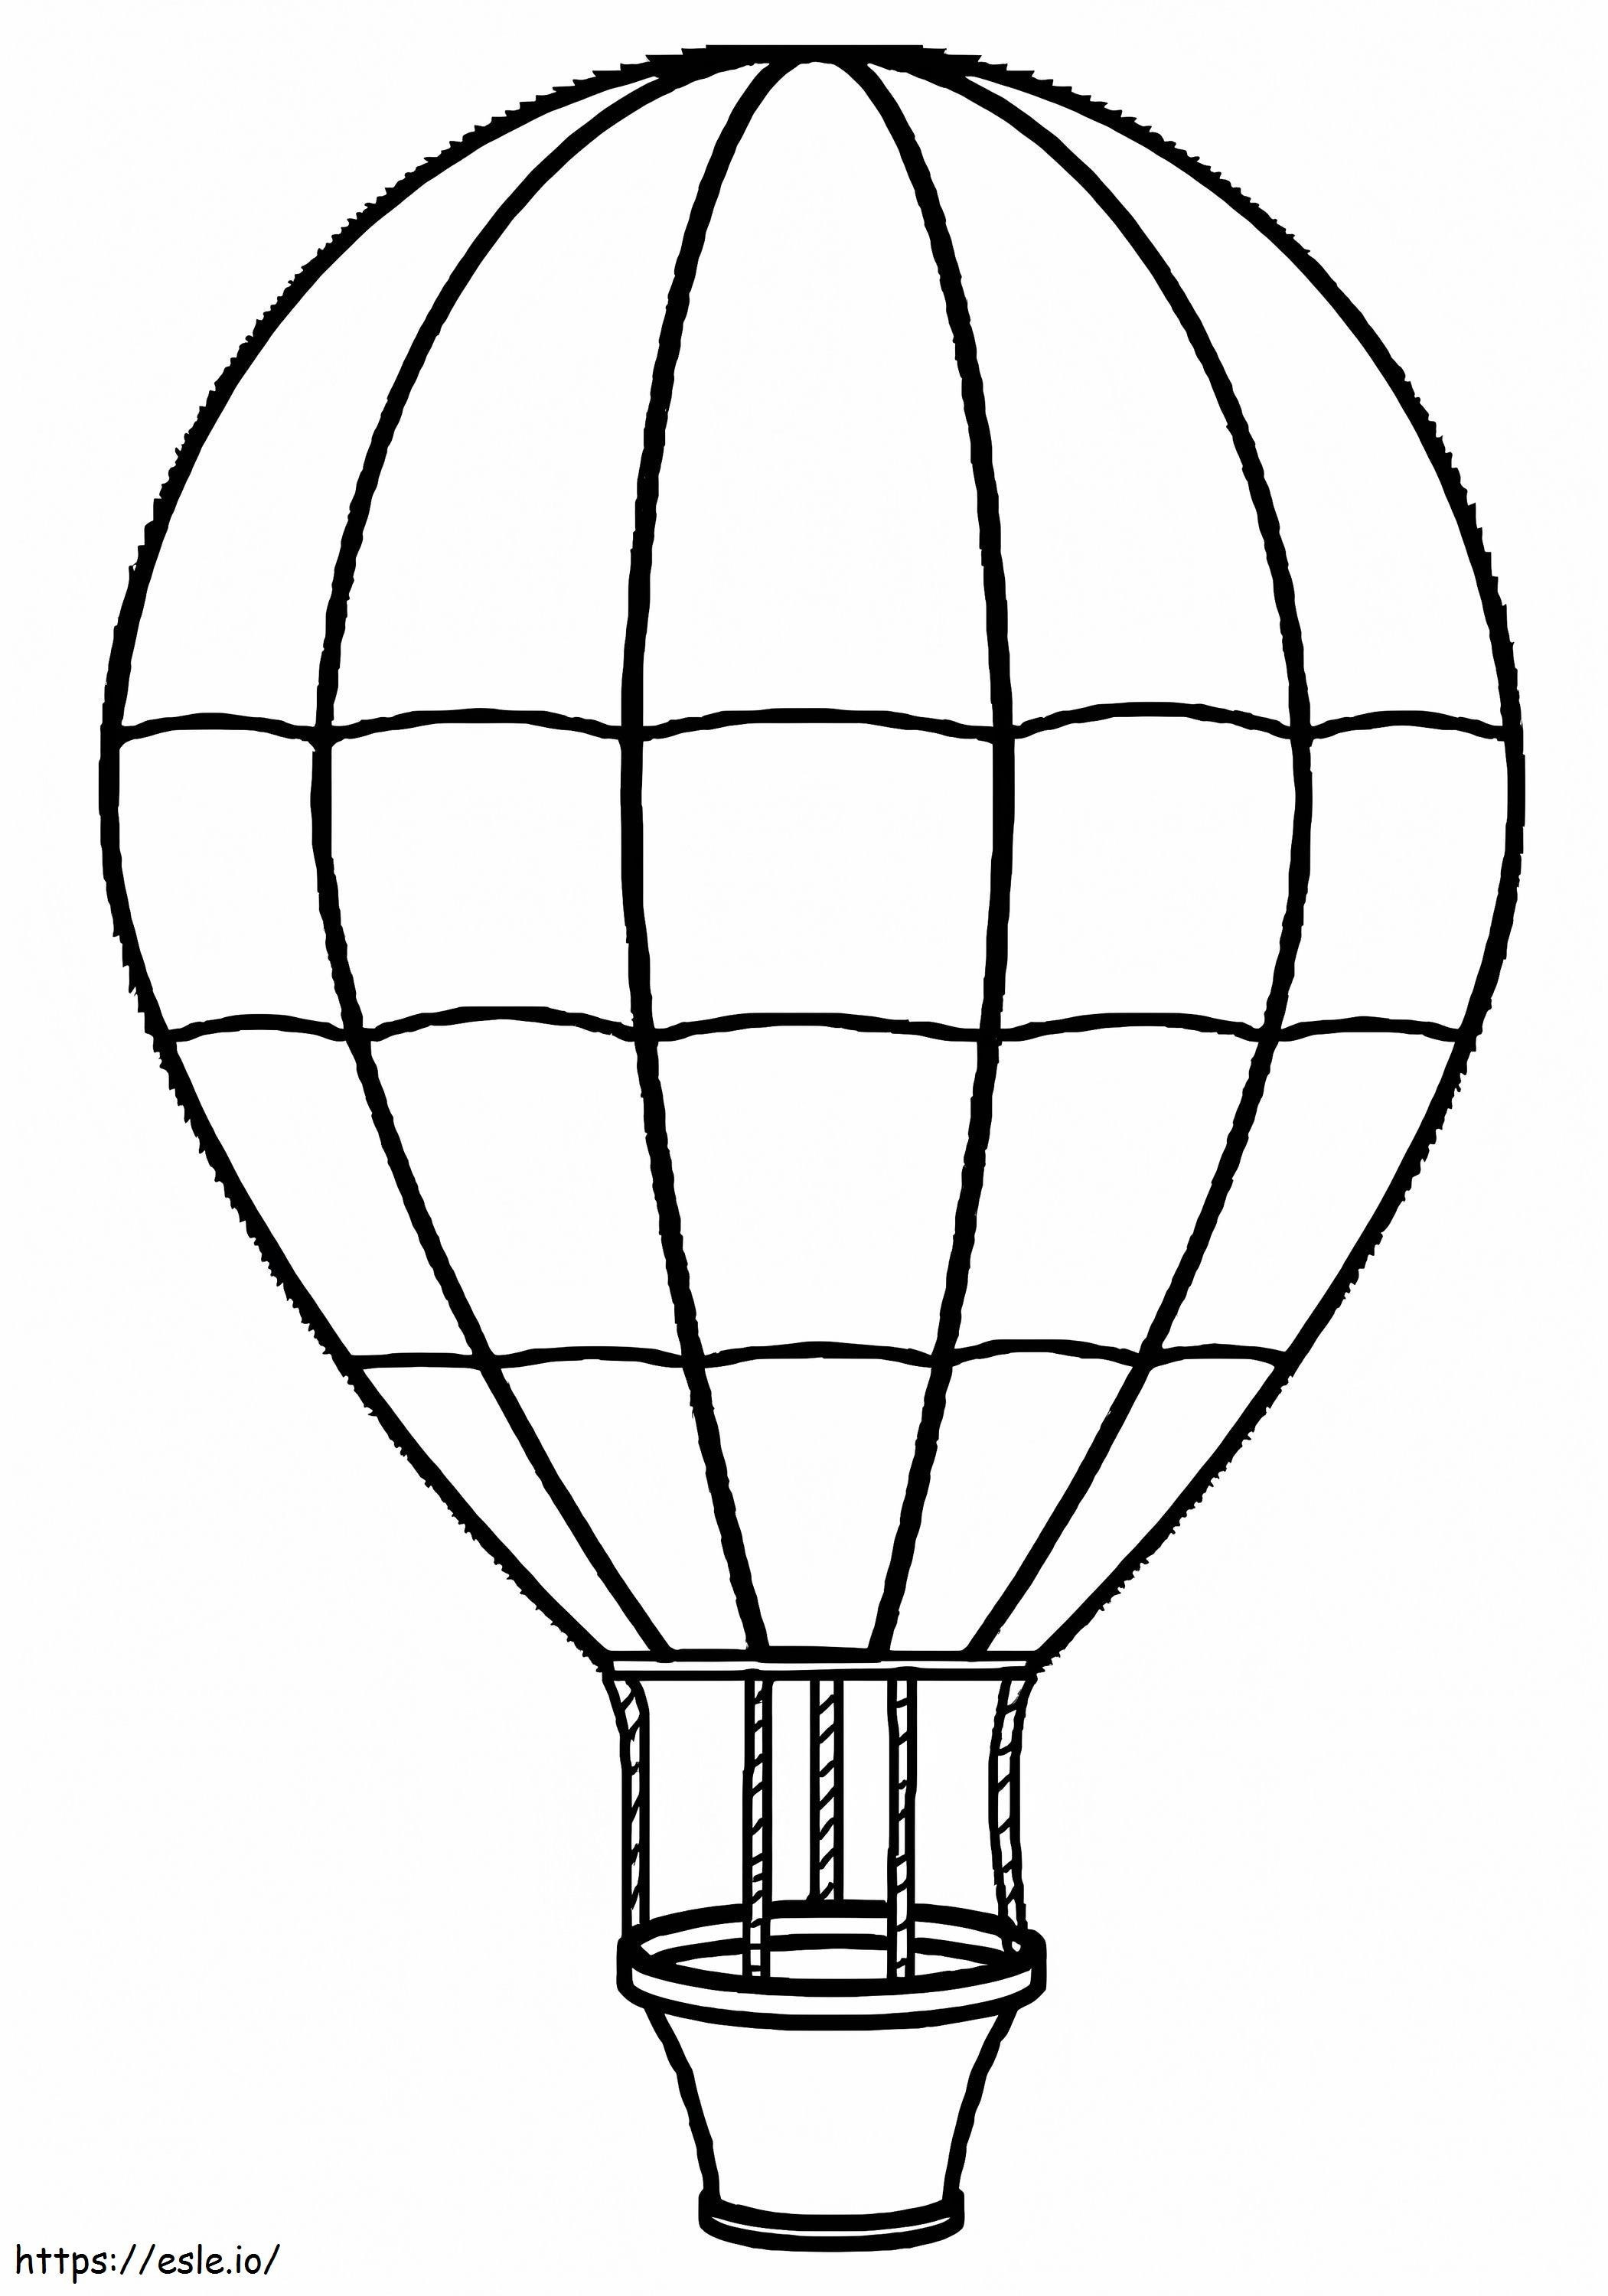 Single Hot Air Balloon 2 coloring page